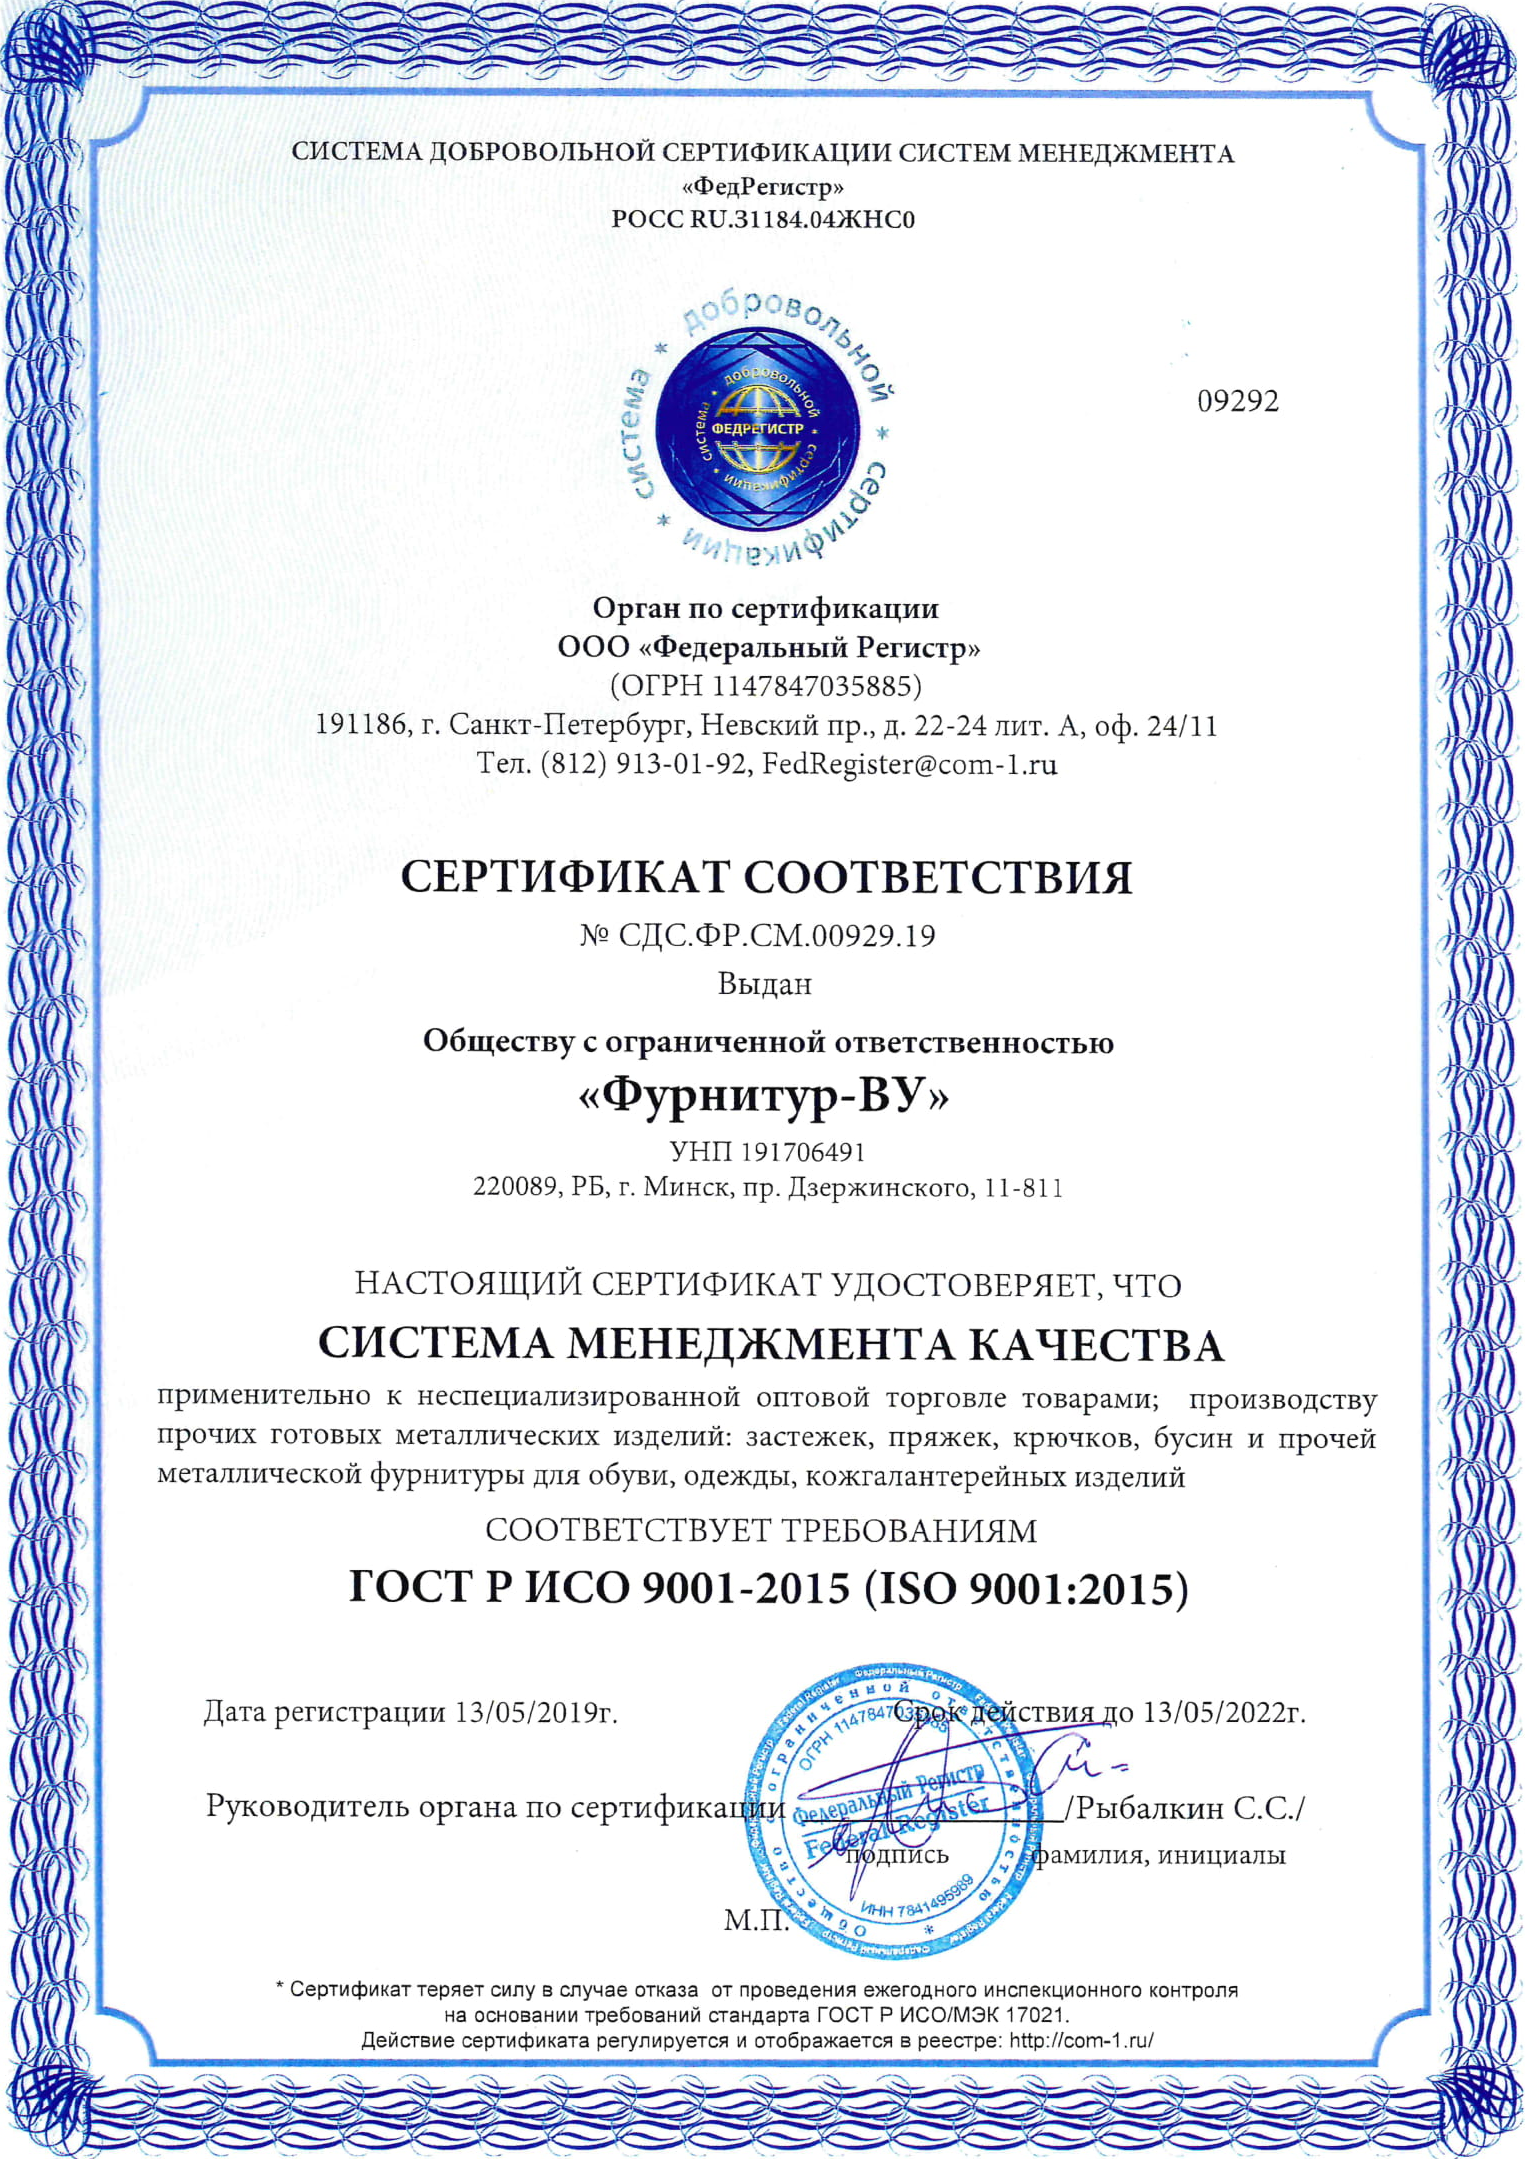 Сертификат соответствия ГОСТ Р ИСО  (ISO 9001:2015)